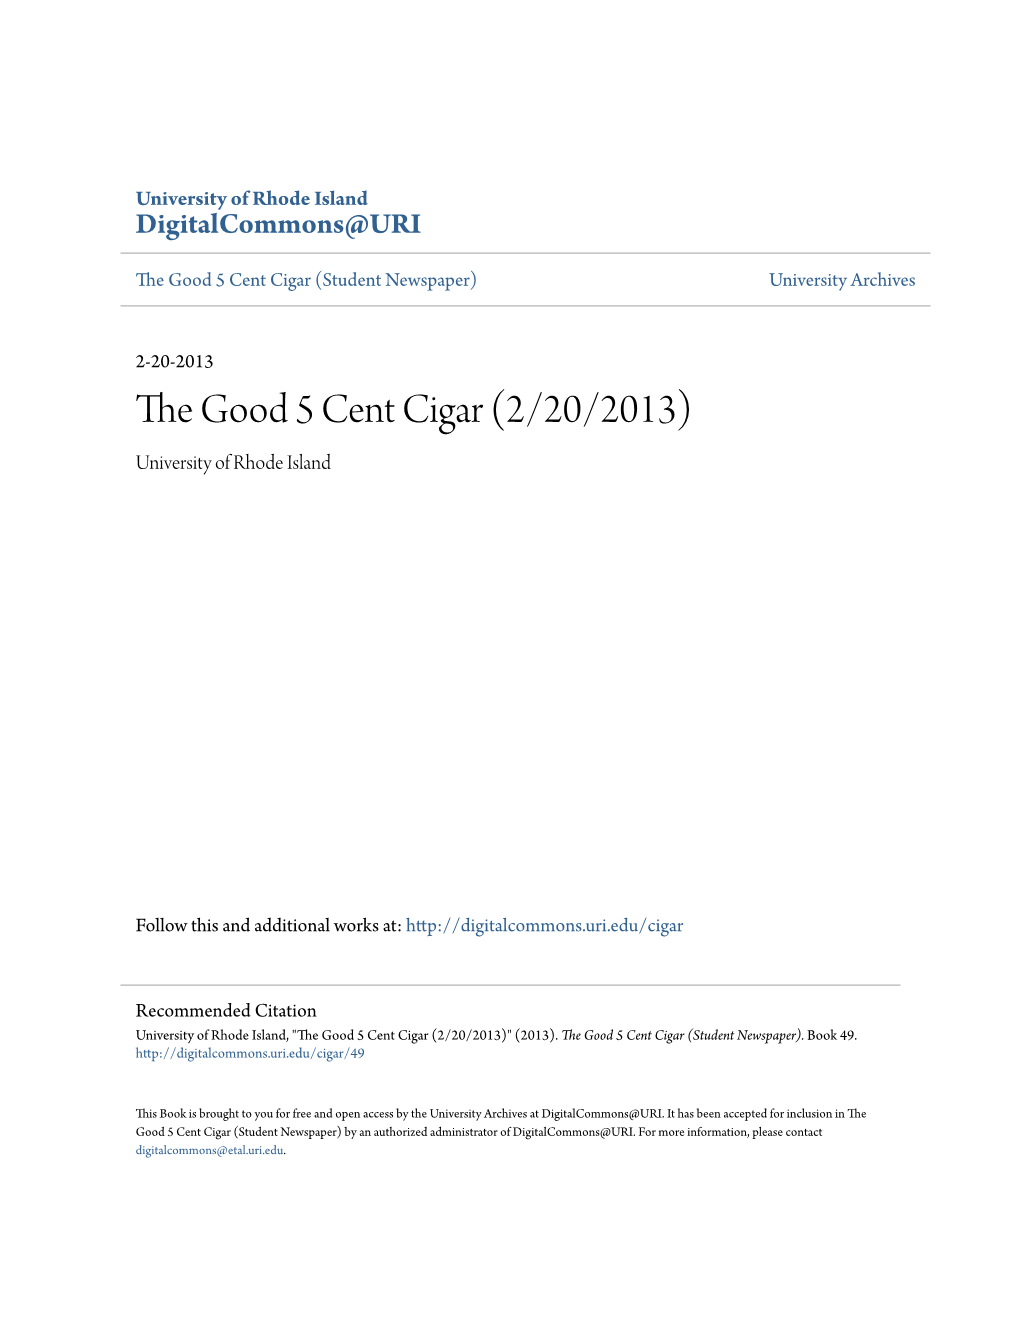 The Good 5 Cent Cigar (2/20/2013) University of Rhode Island